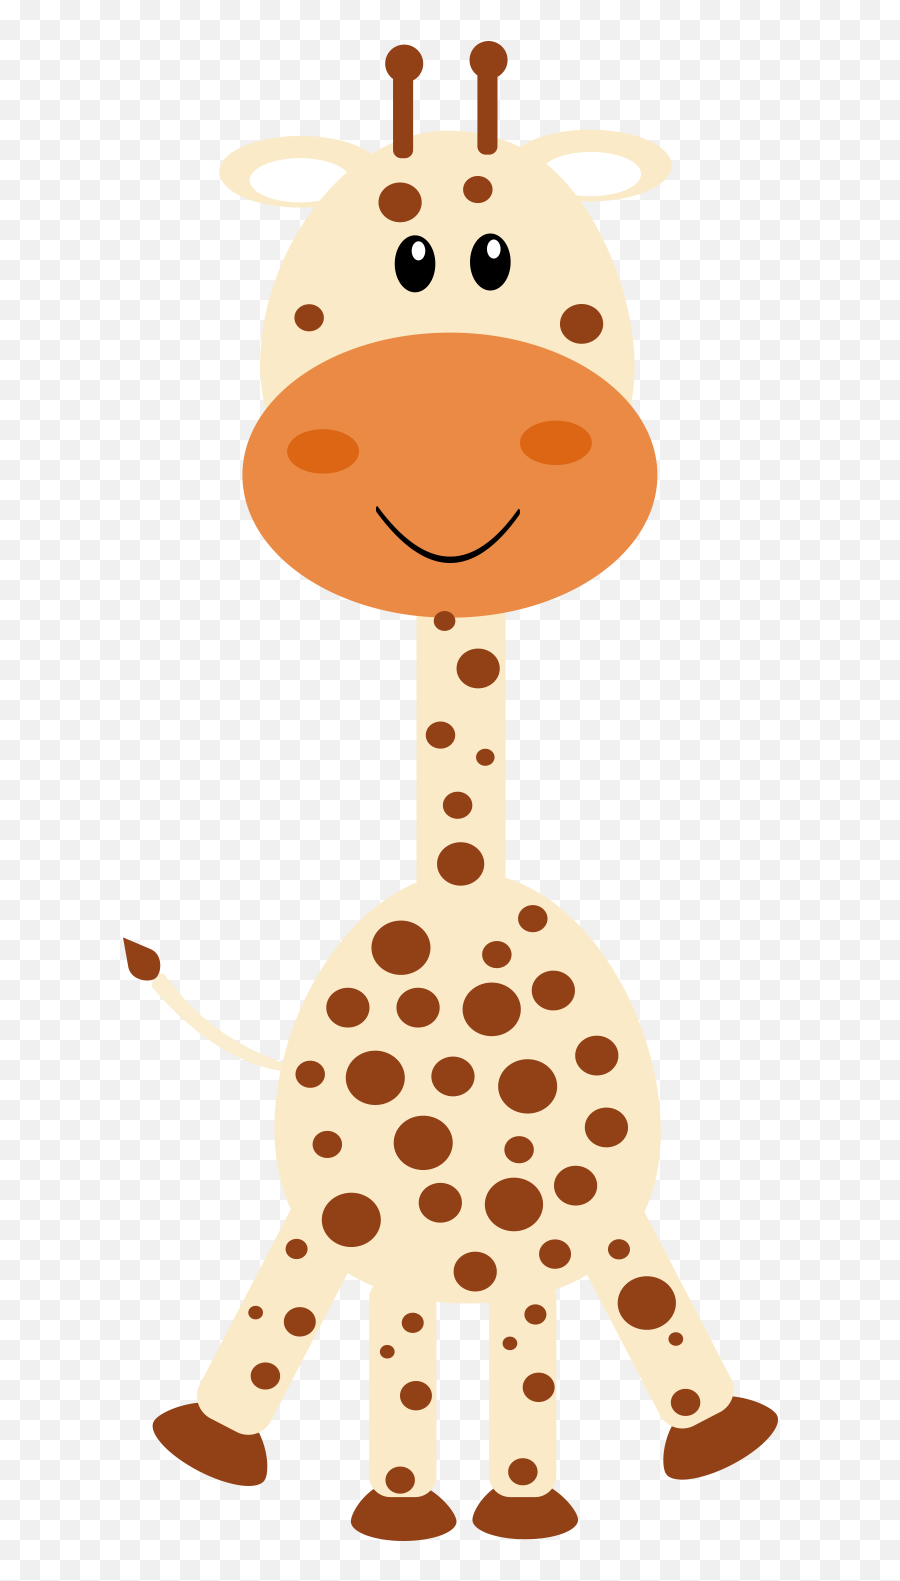 Giraffes Baby Shower Imagenes De Bebes Animados Png Free Transparent Png Images Pngaaa Com